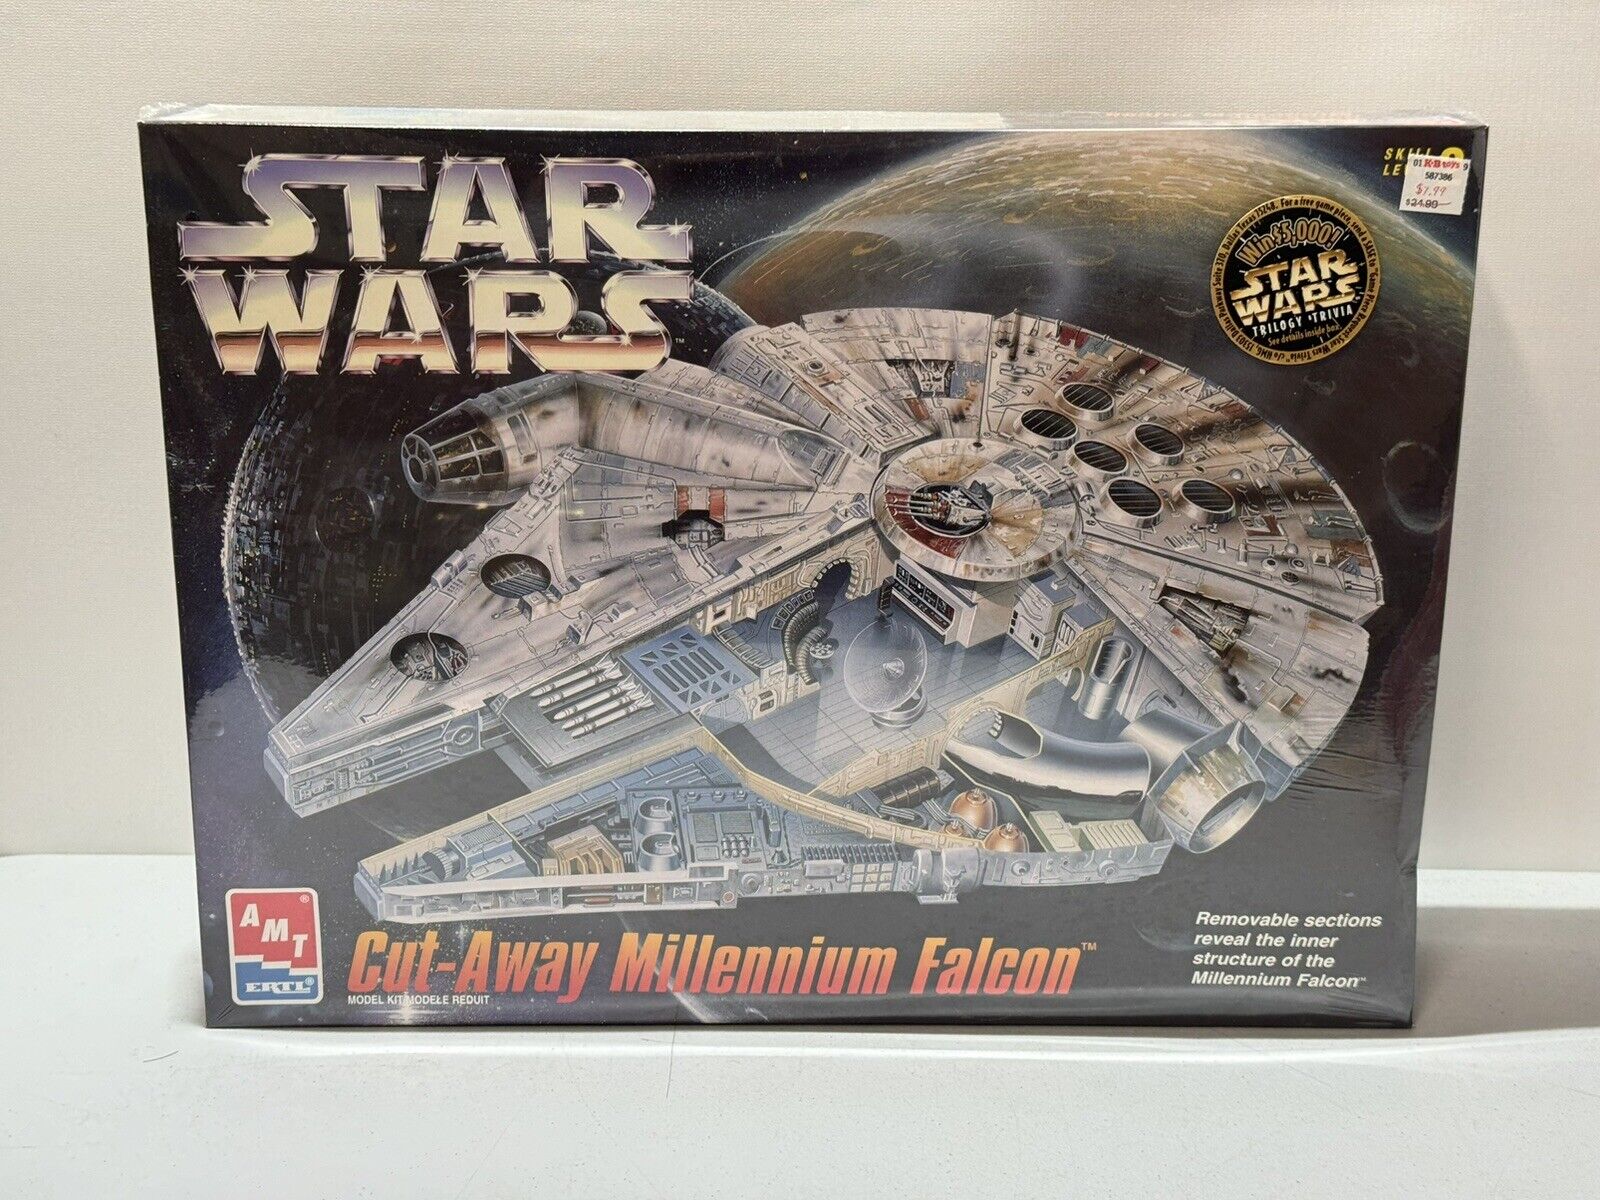 Star Wars Cut-Away Millennium Falcon model kit AMT/ERTL # 8789, sealed, Vintage